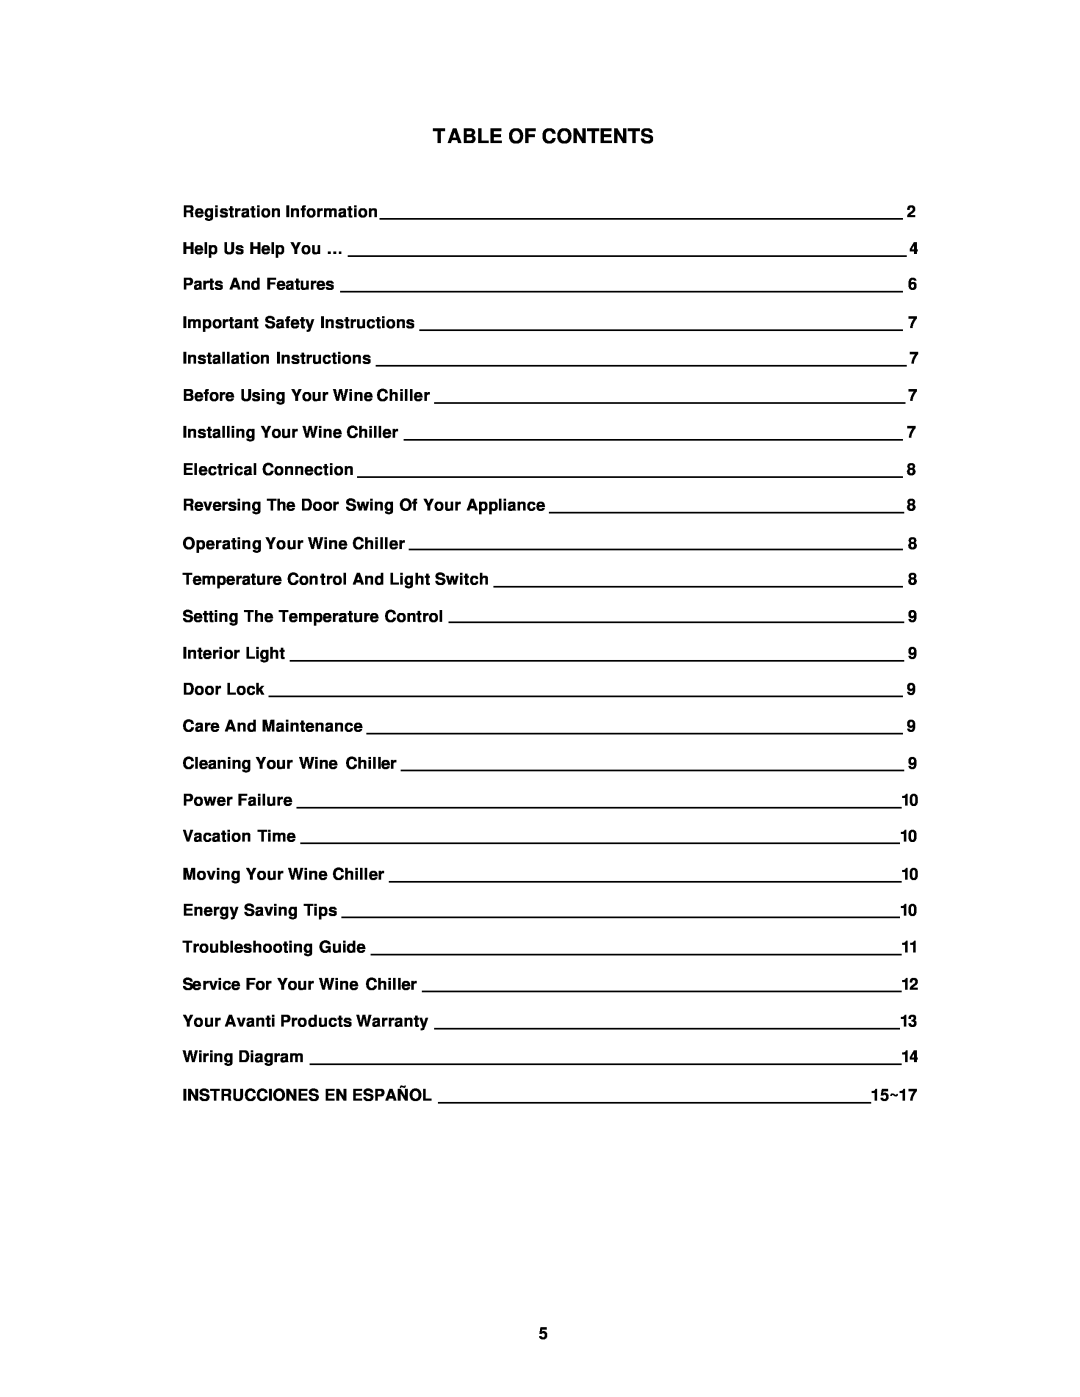 Avanti EWC28 instruction manual Table Of Contents 